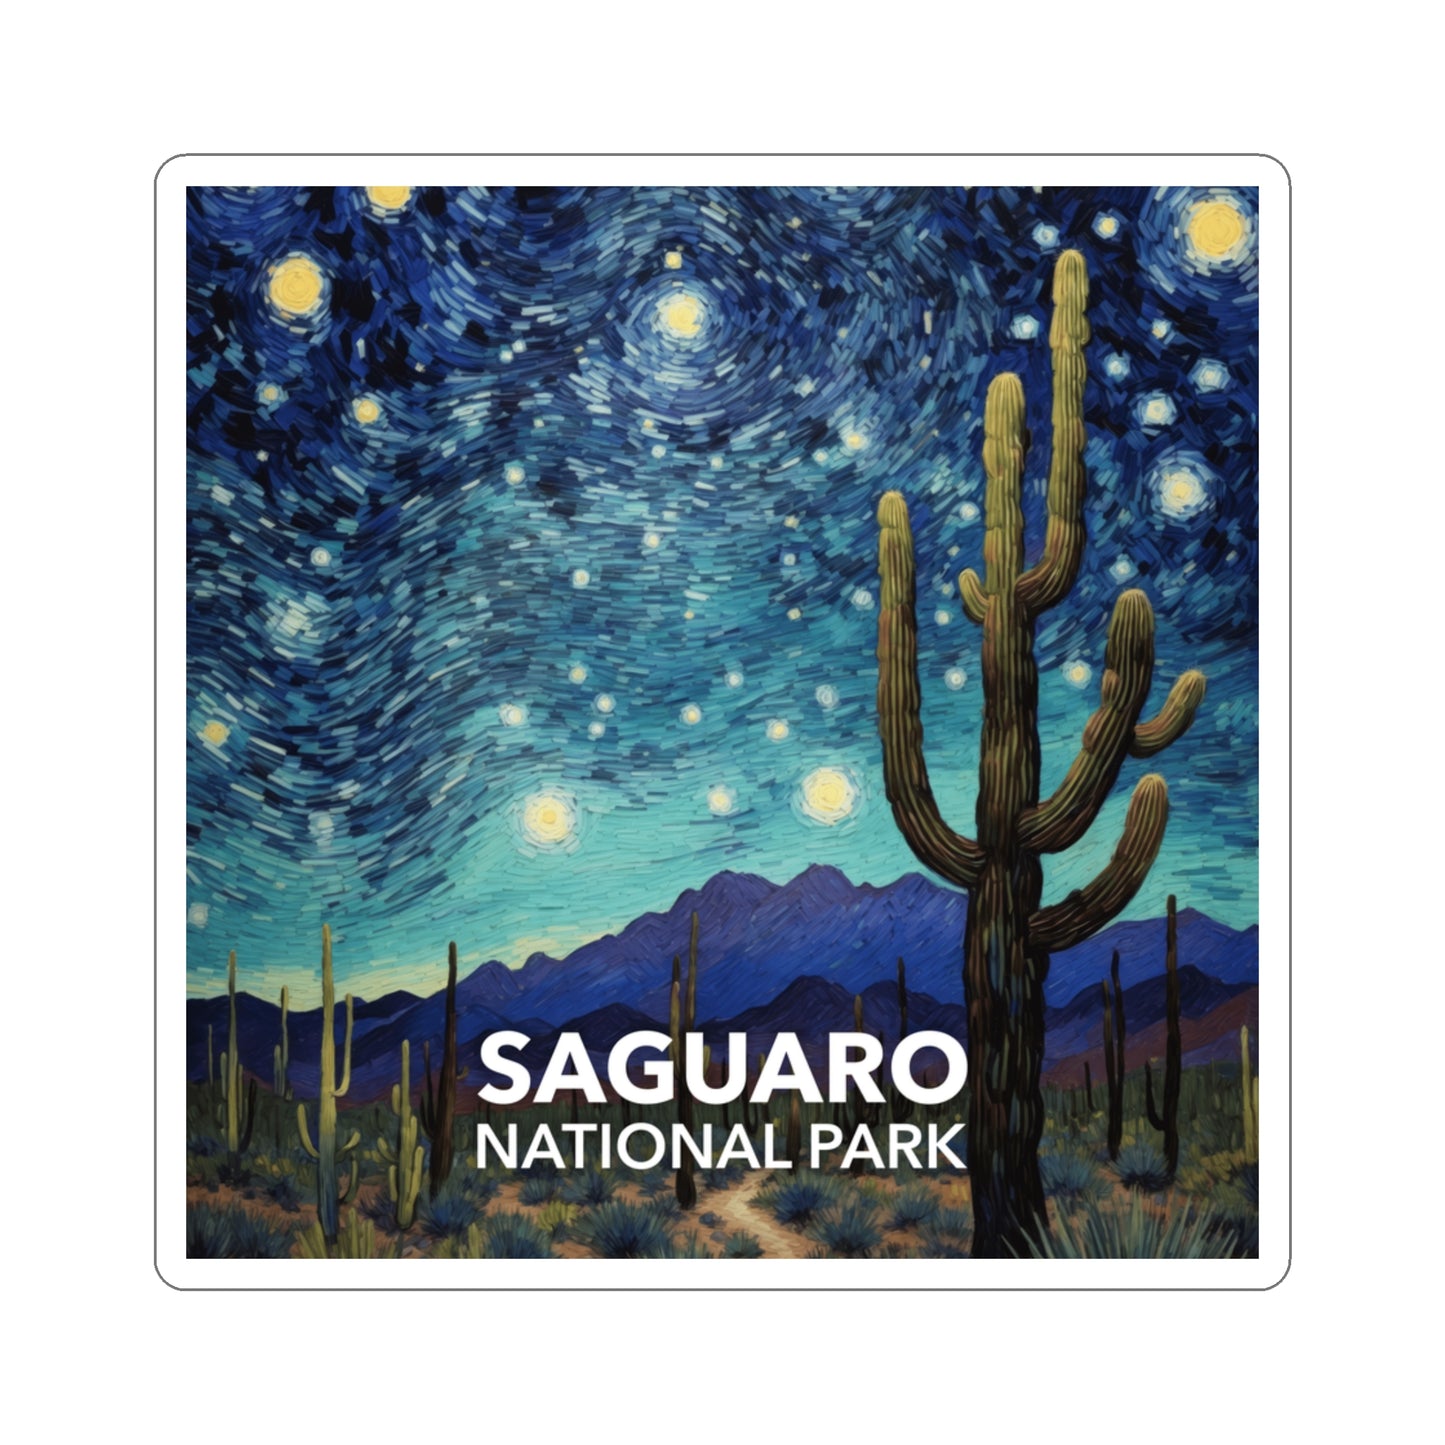 Saguaro National Park Sticker - The Starry Night